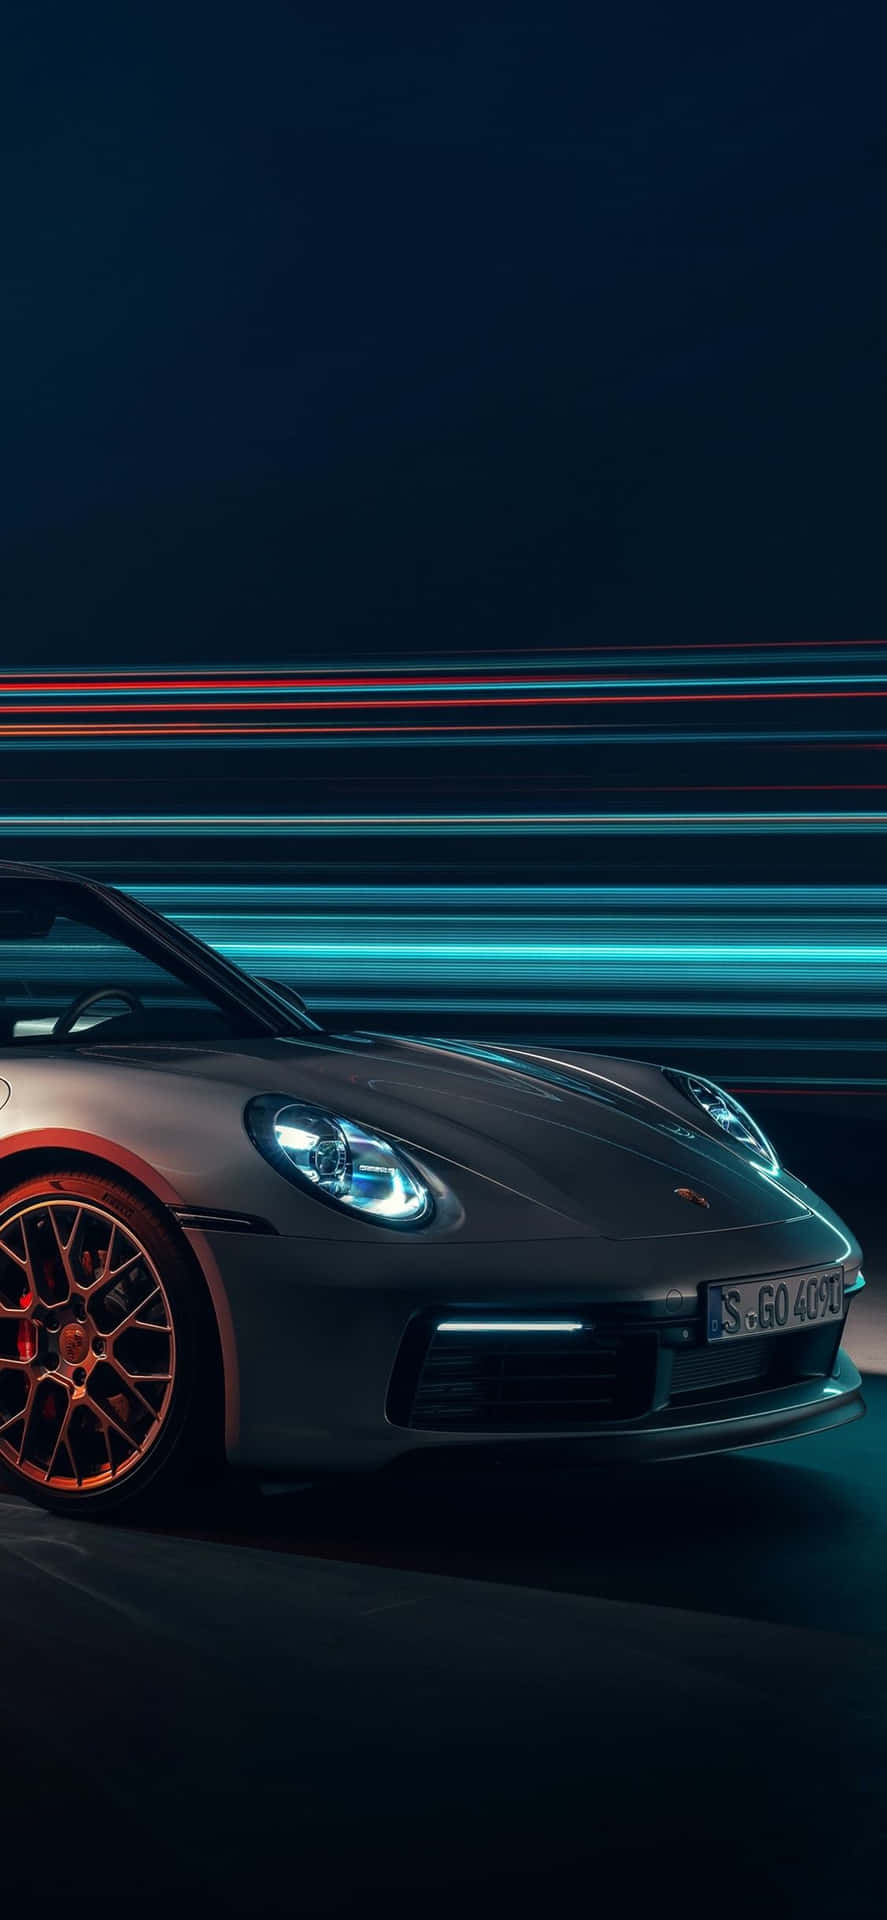 Porsche 911 Gts - A New Car With A Red Stripe Wallpaper